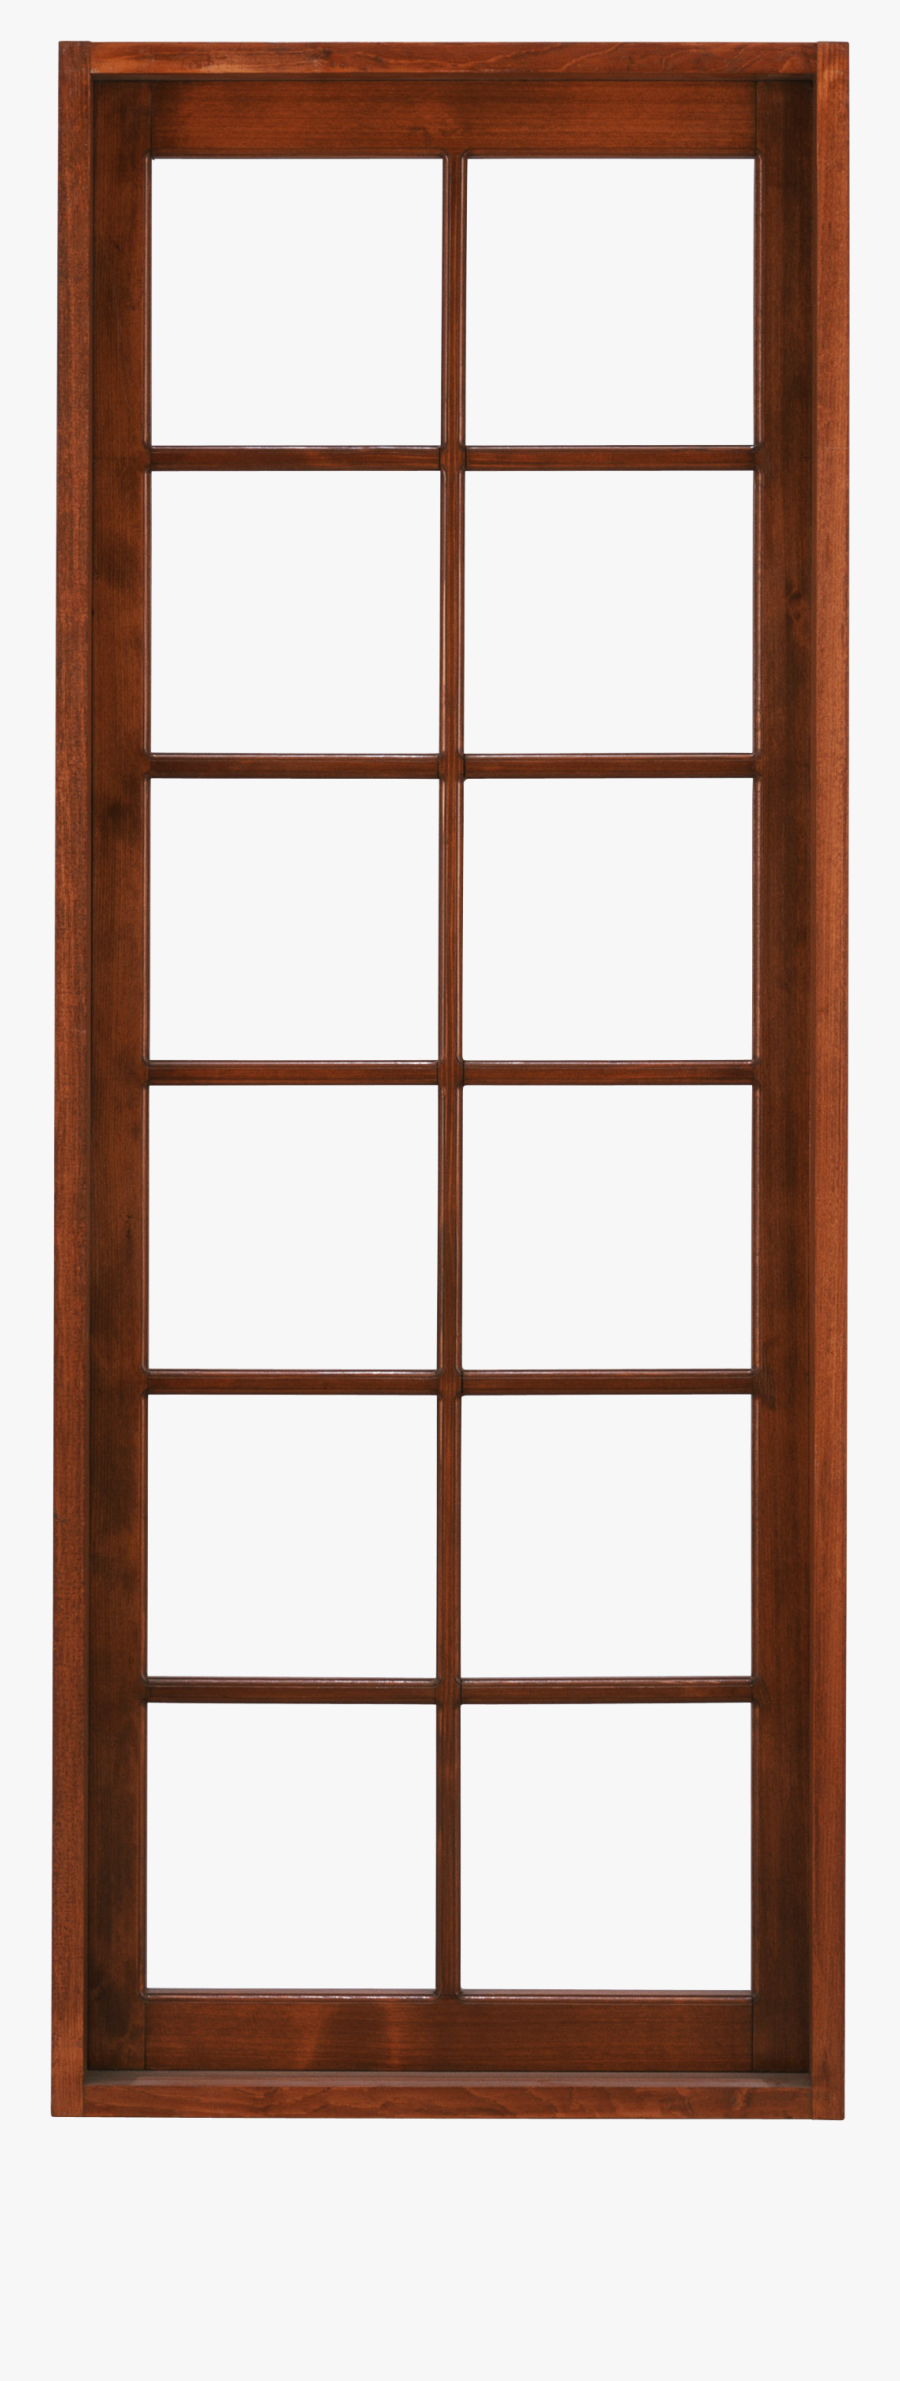 Windows Clip Wooden - Wood Window Png, Transparent Clipart